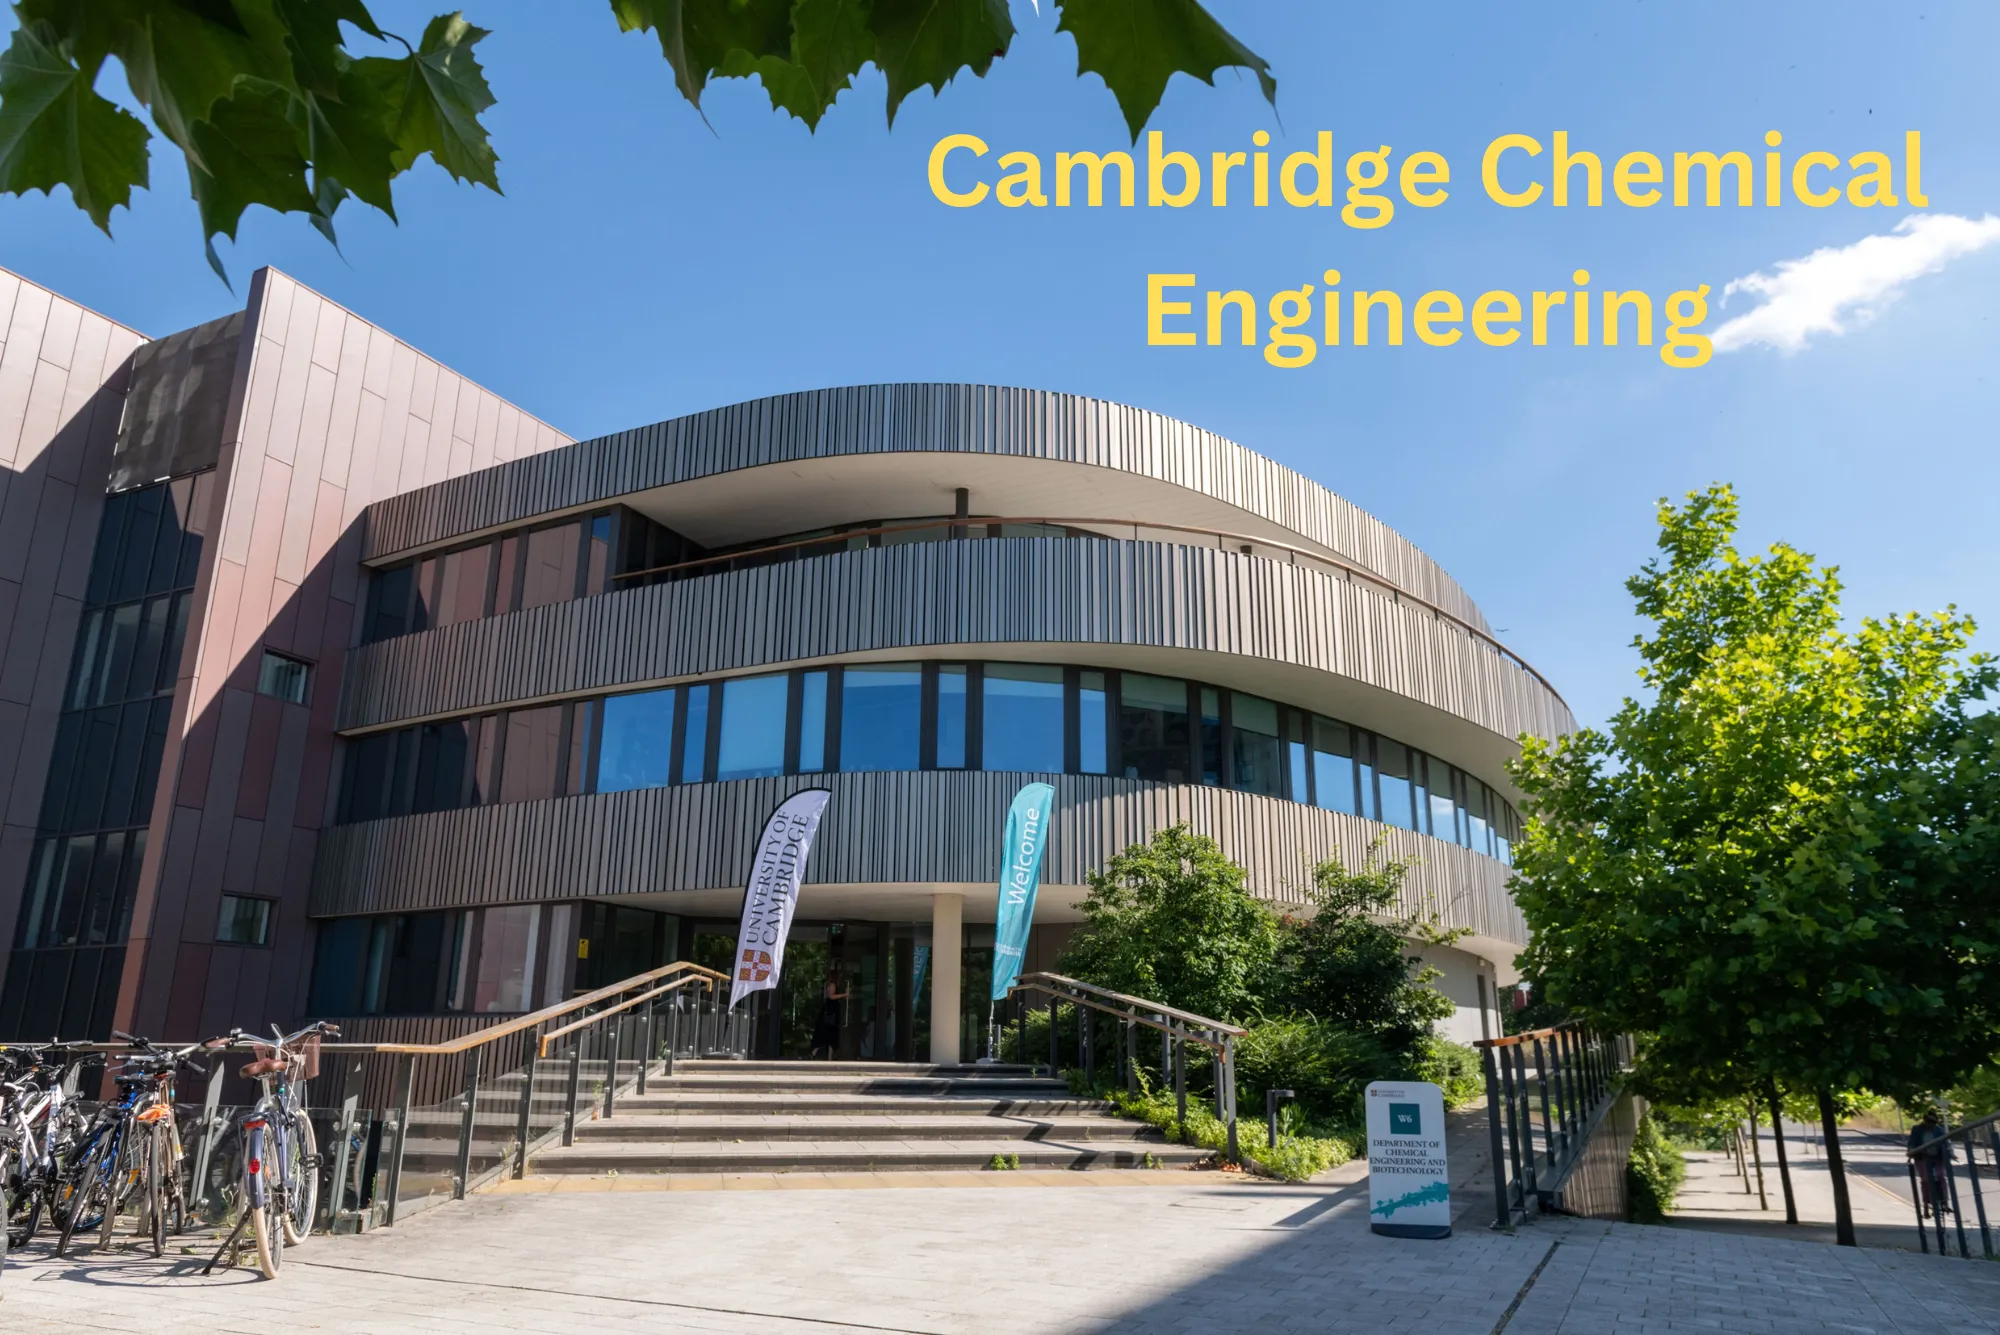 Cambridge Chemical Engineering